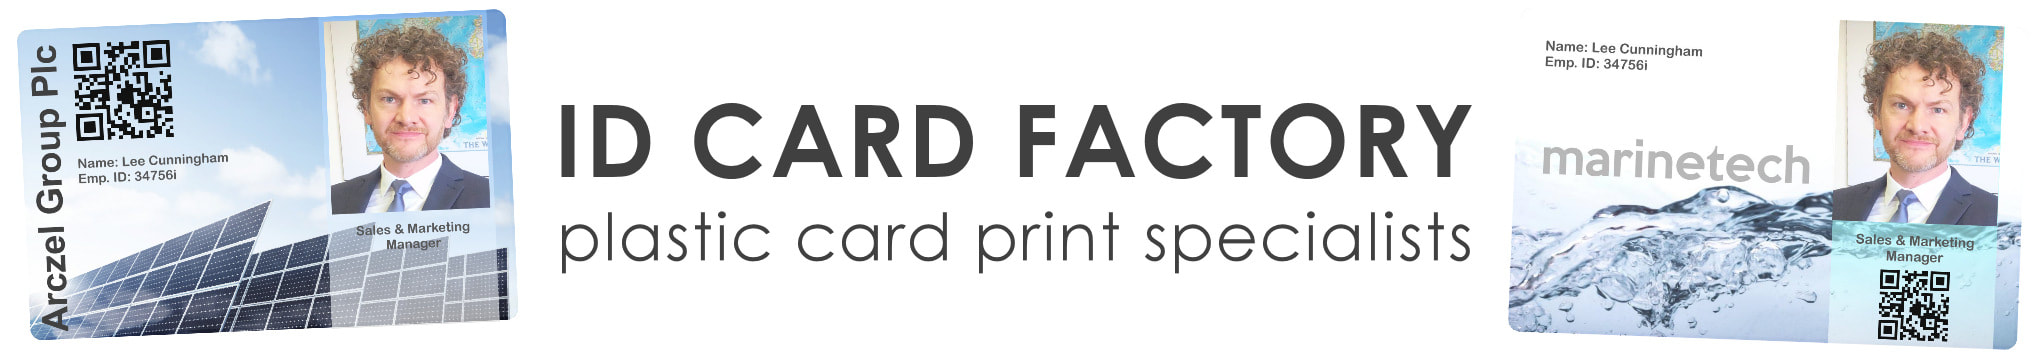 Nuneaton ID card printing | staff photo ID cards | company employee ID card print service | Local Identity Card Printing | Custom Design 